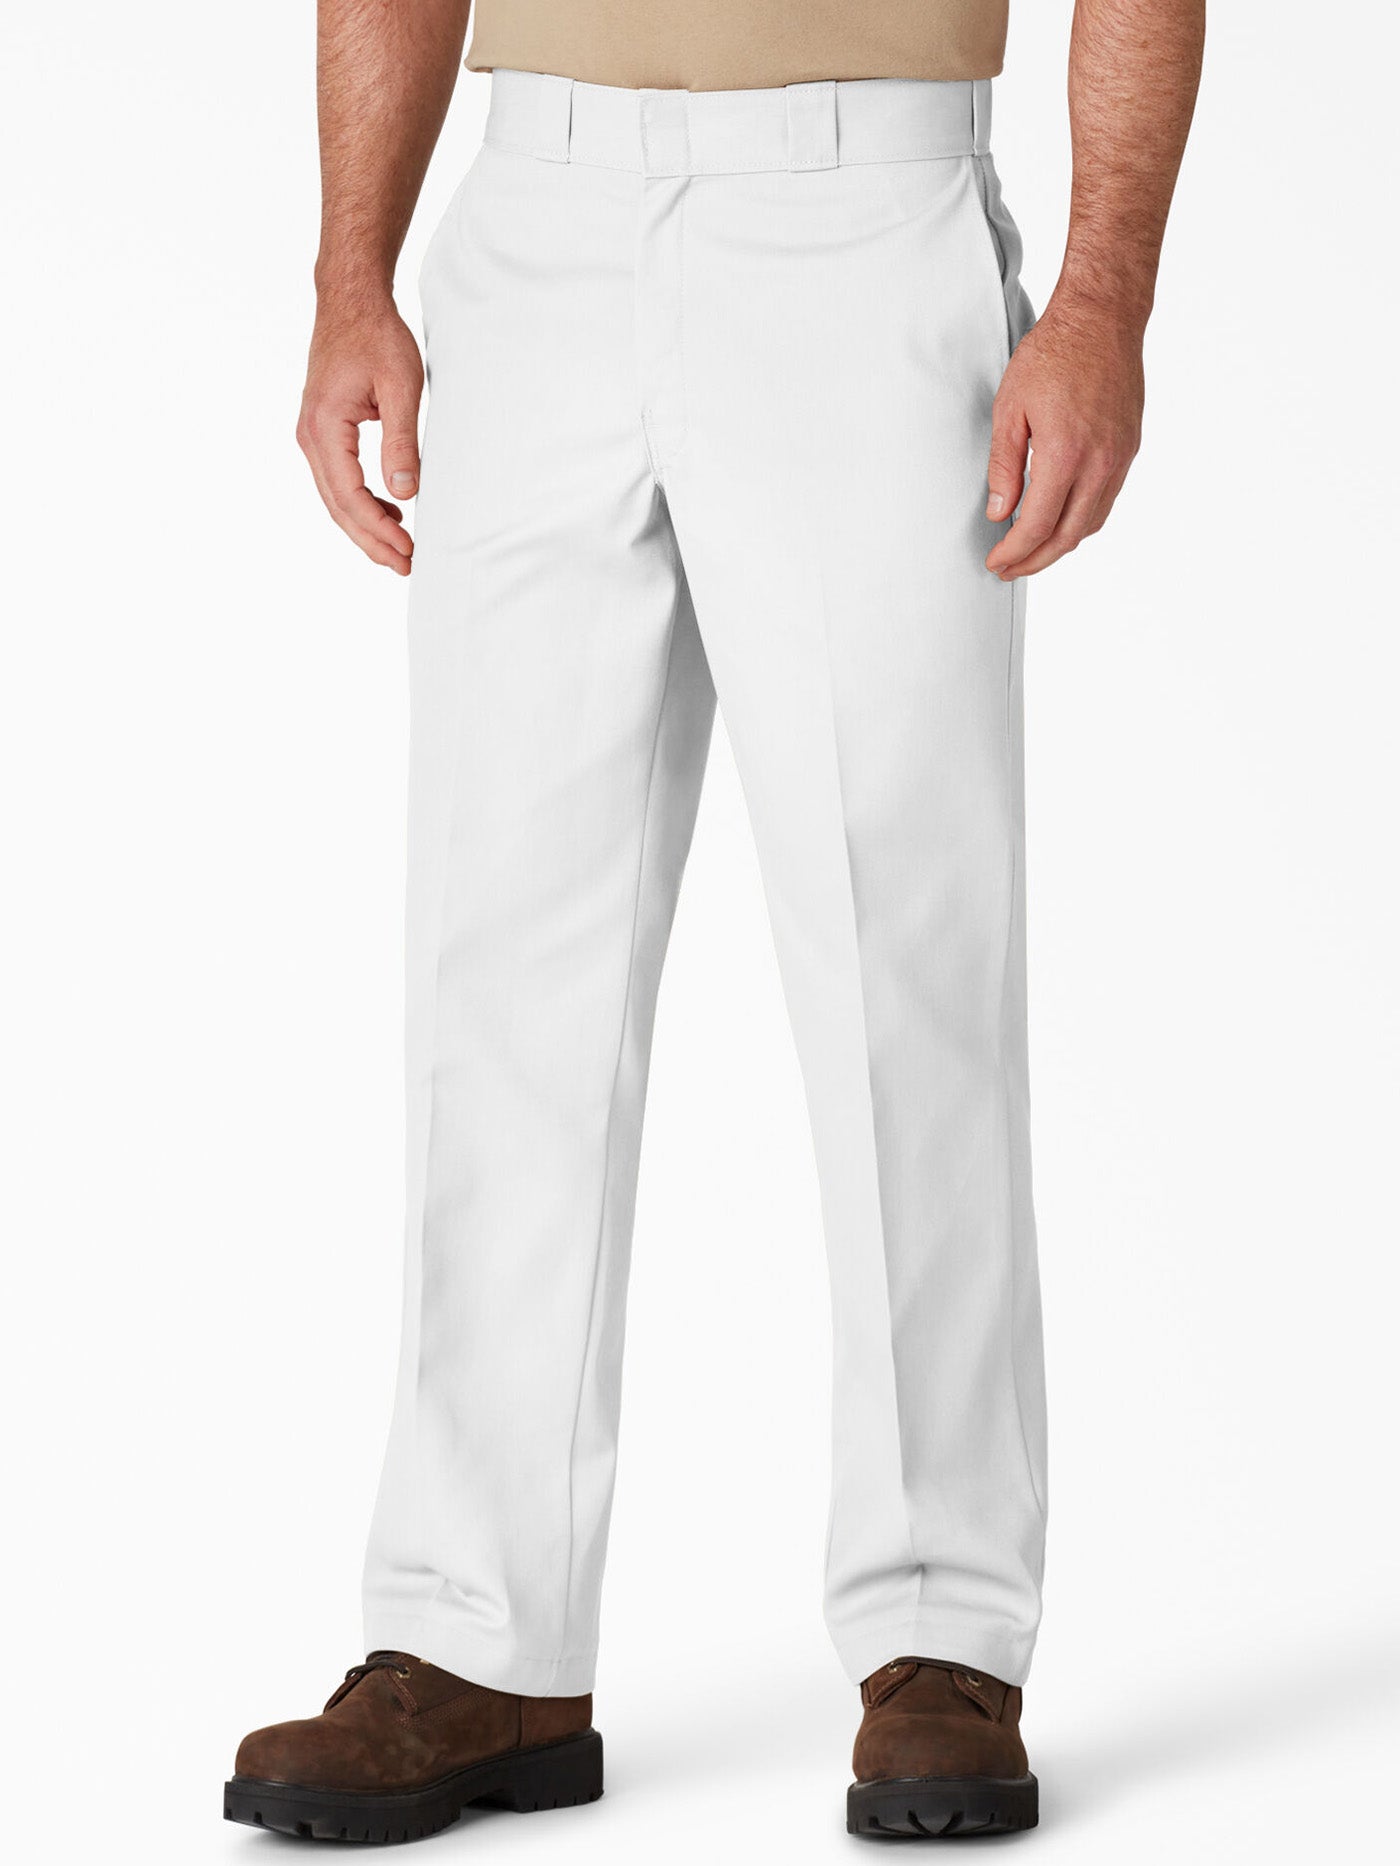 Dickies 874 Original Work White Pants